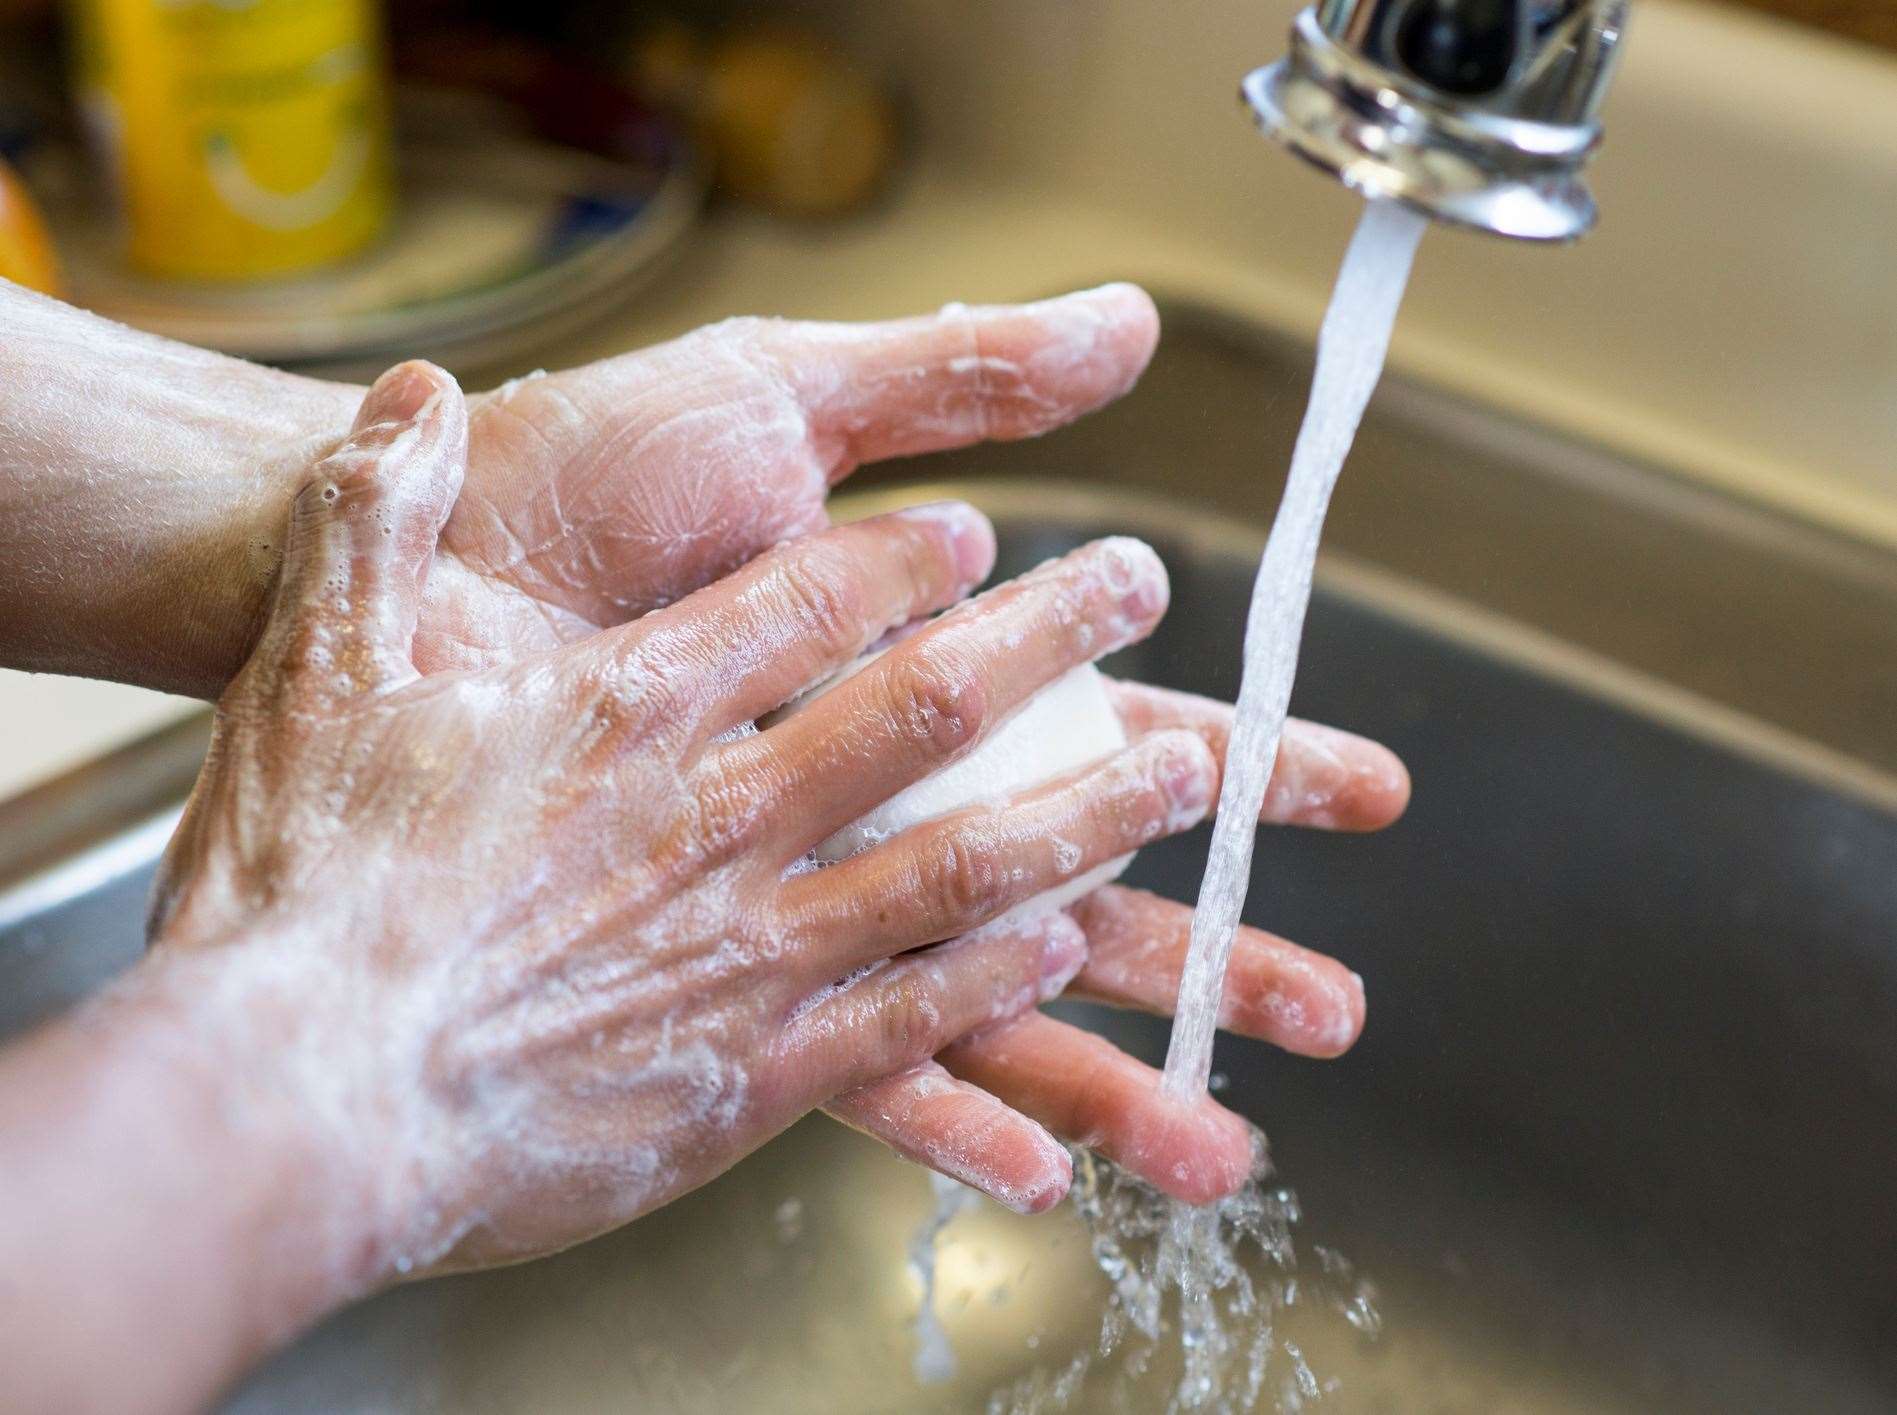 Obsessive handwashing can be a symptom of OCD